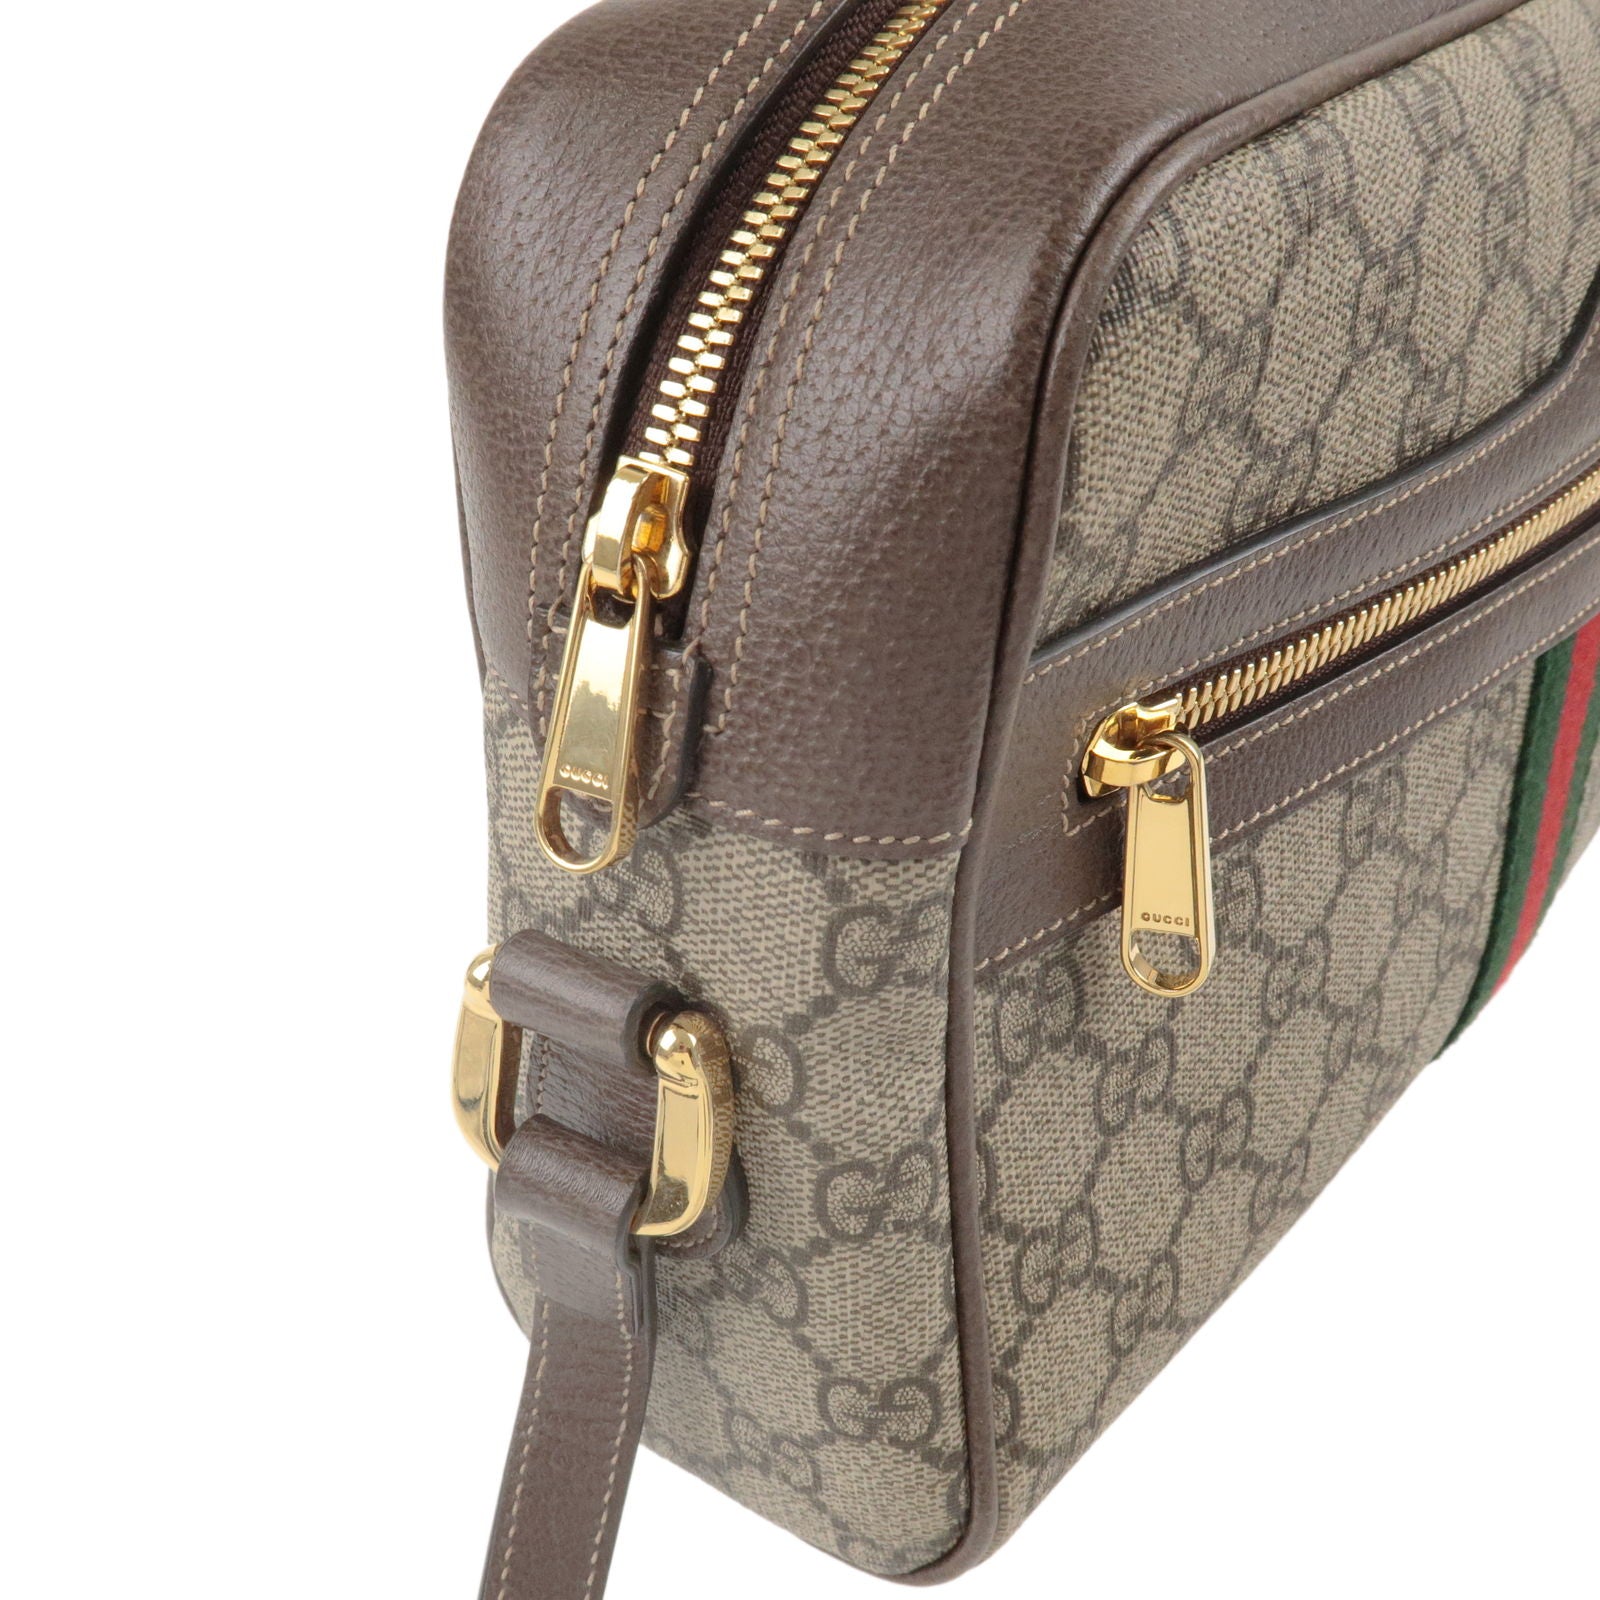 Gucci Ophidia GG Supreme Small Shoulder Bag